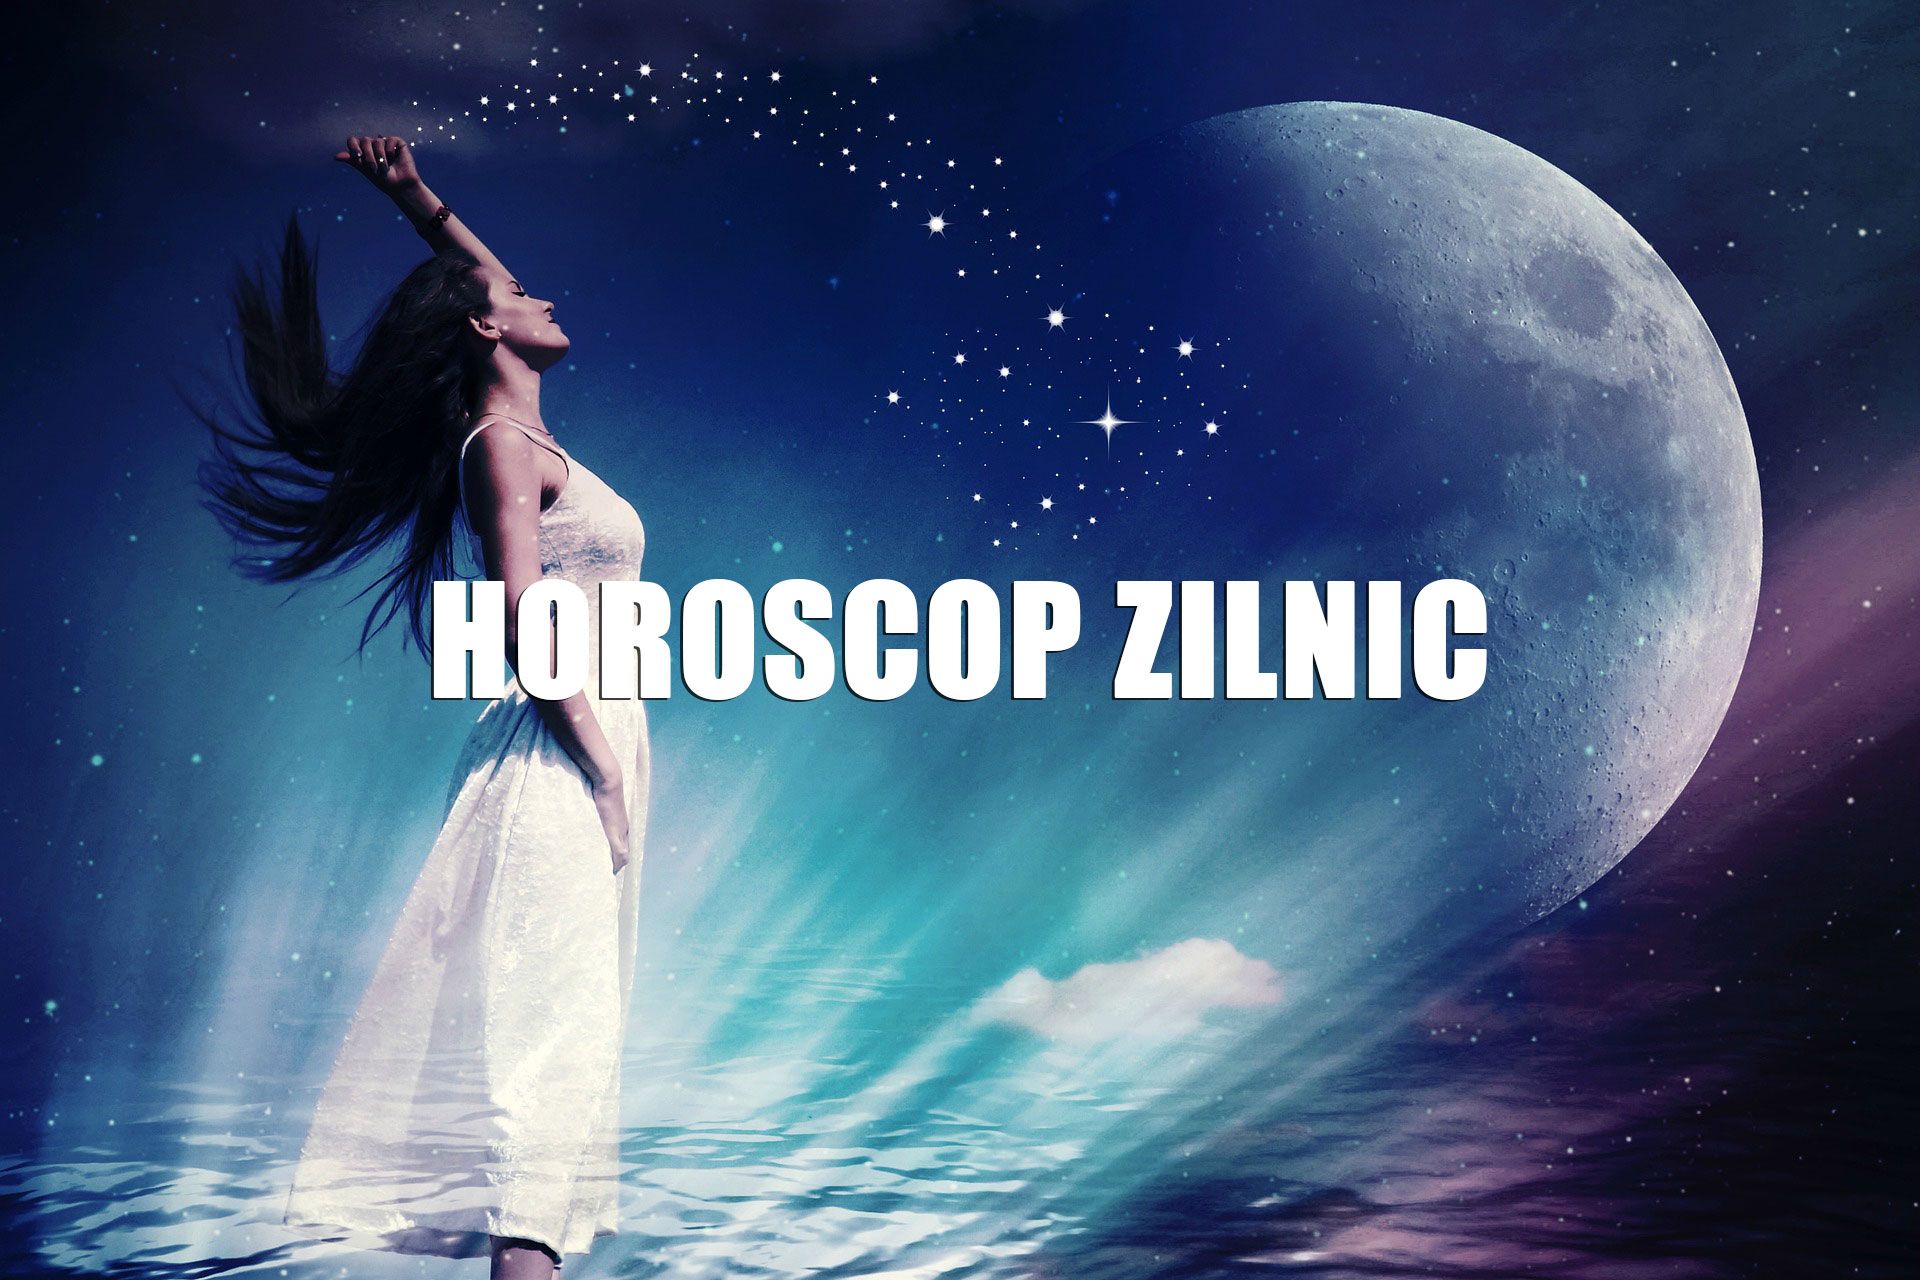 Horoscop zilnic 18 martie 2019 - 3 zodii încep săptămâna cu noroc